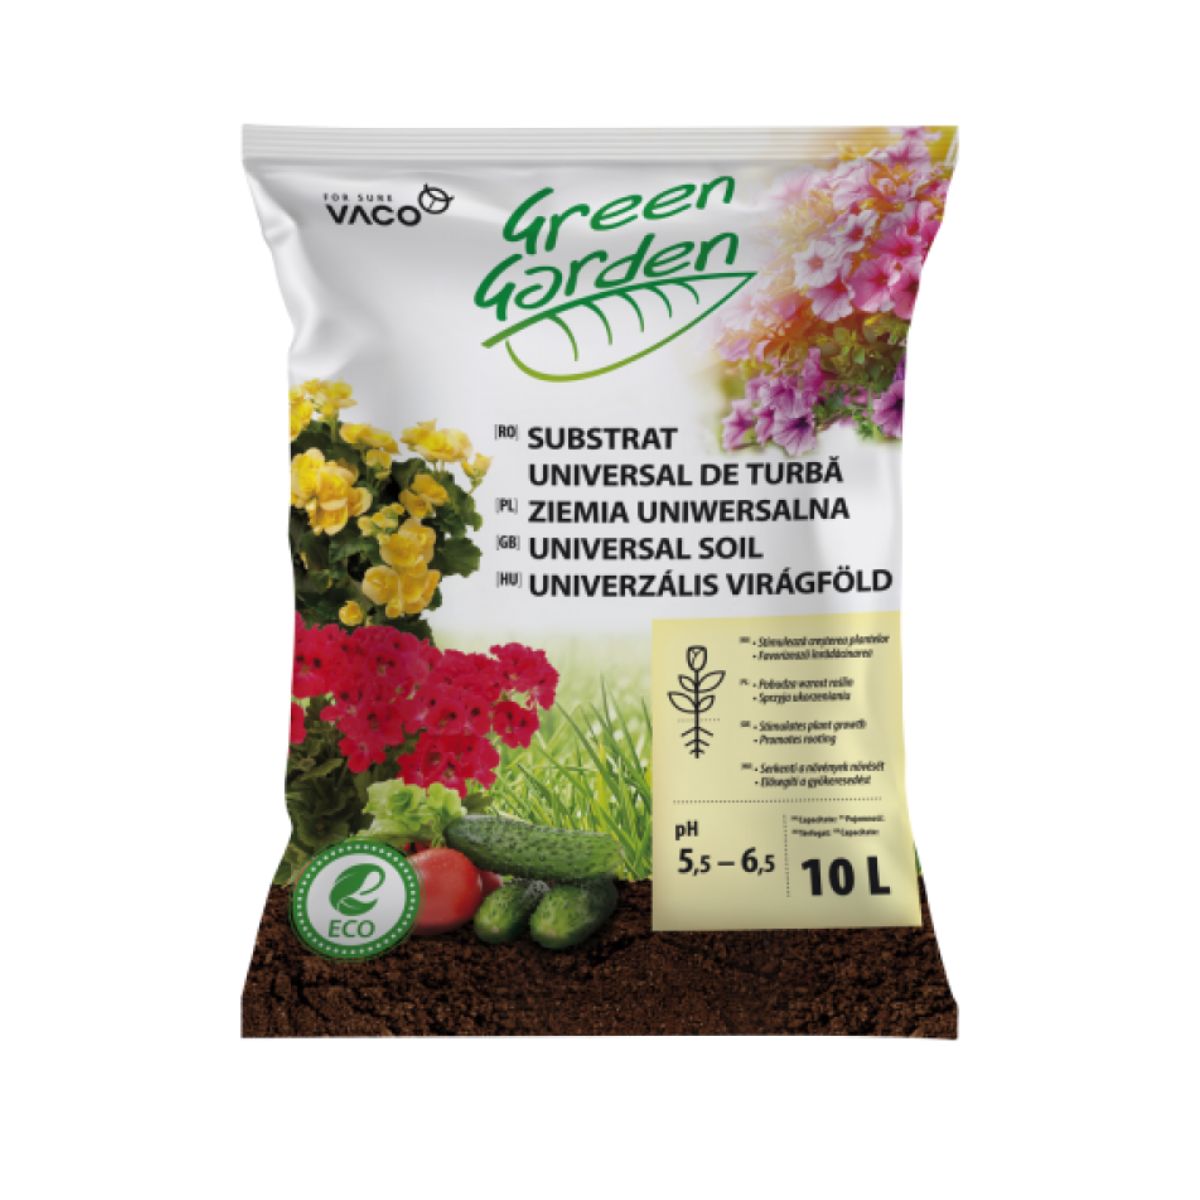 Pamant, turba & substraturi - Substrat universal de turba pentru semanat si plantat, 10 litri, hectarul.ro